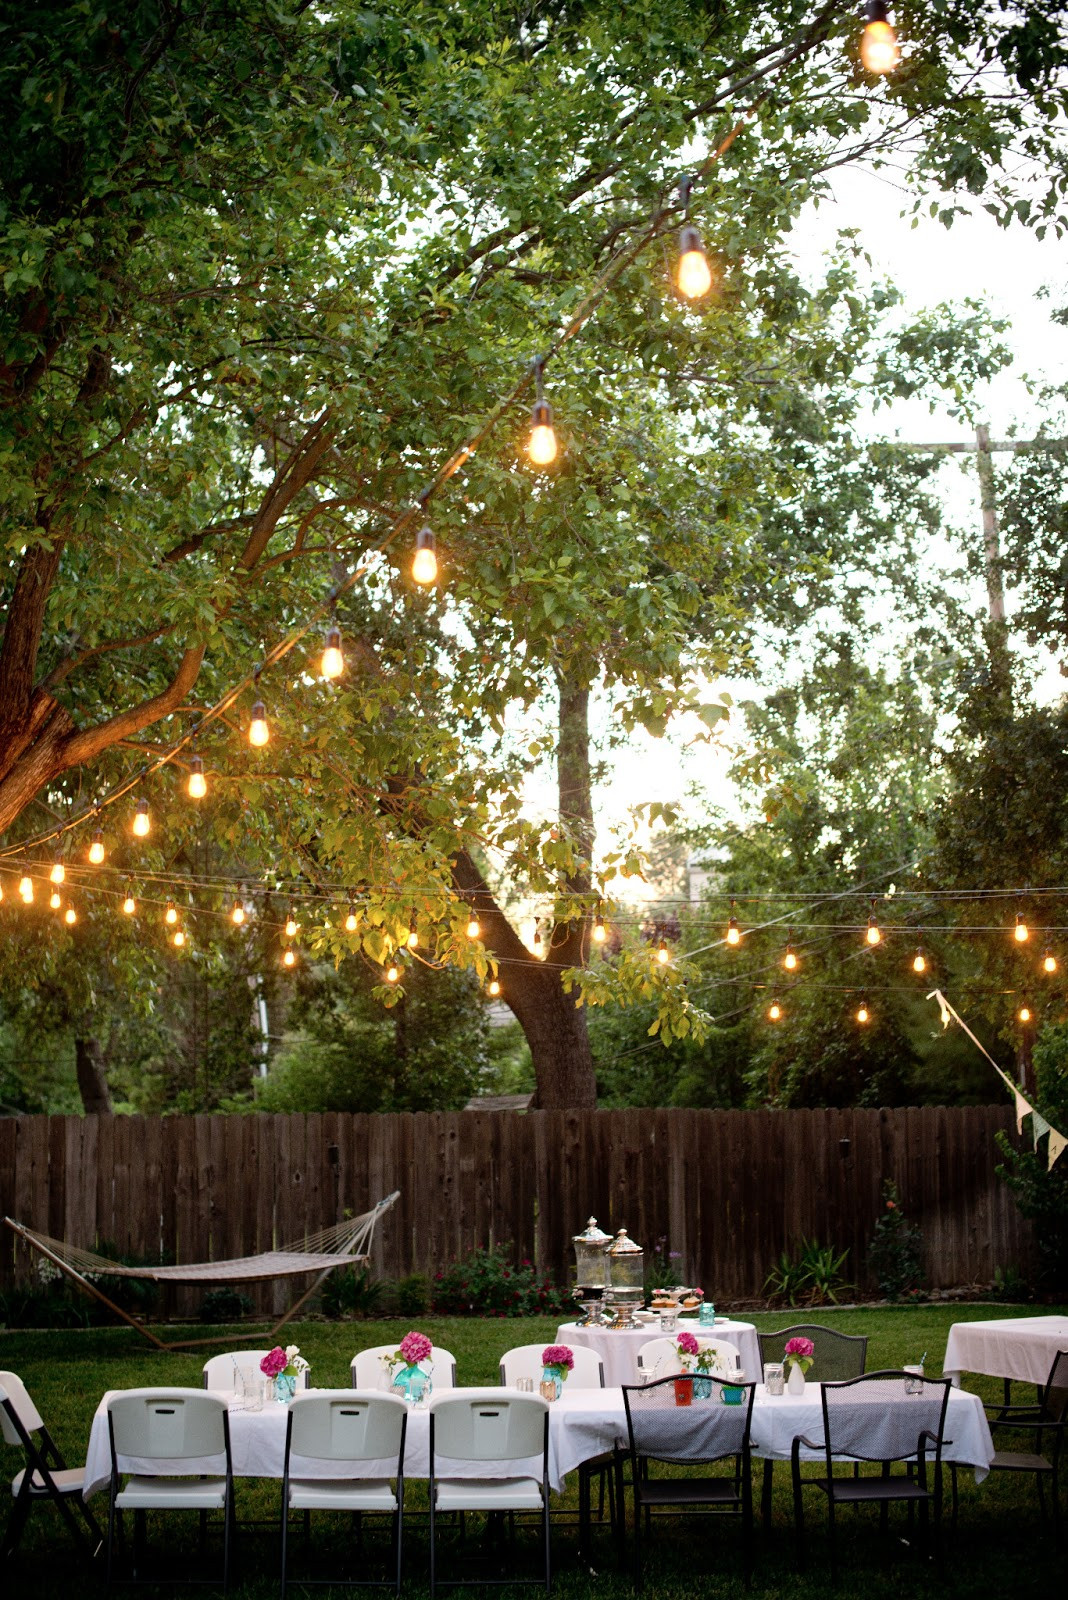 Outdoor Lighting Ideas For Backyard Party
 Domestic Fashionista Backyard Birthday Fun Pink